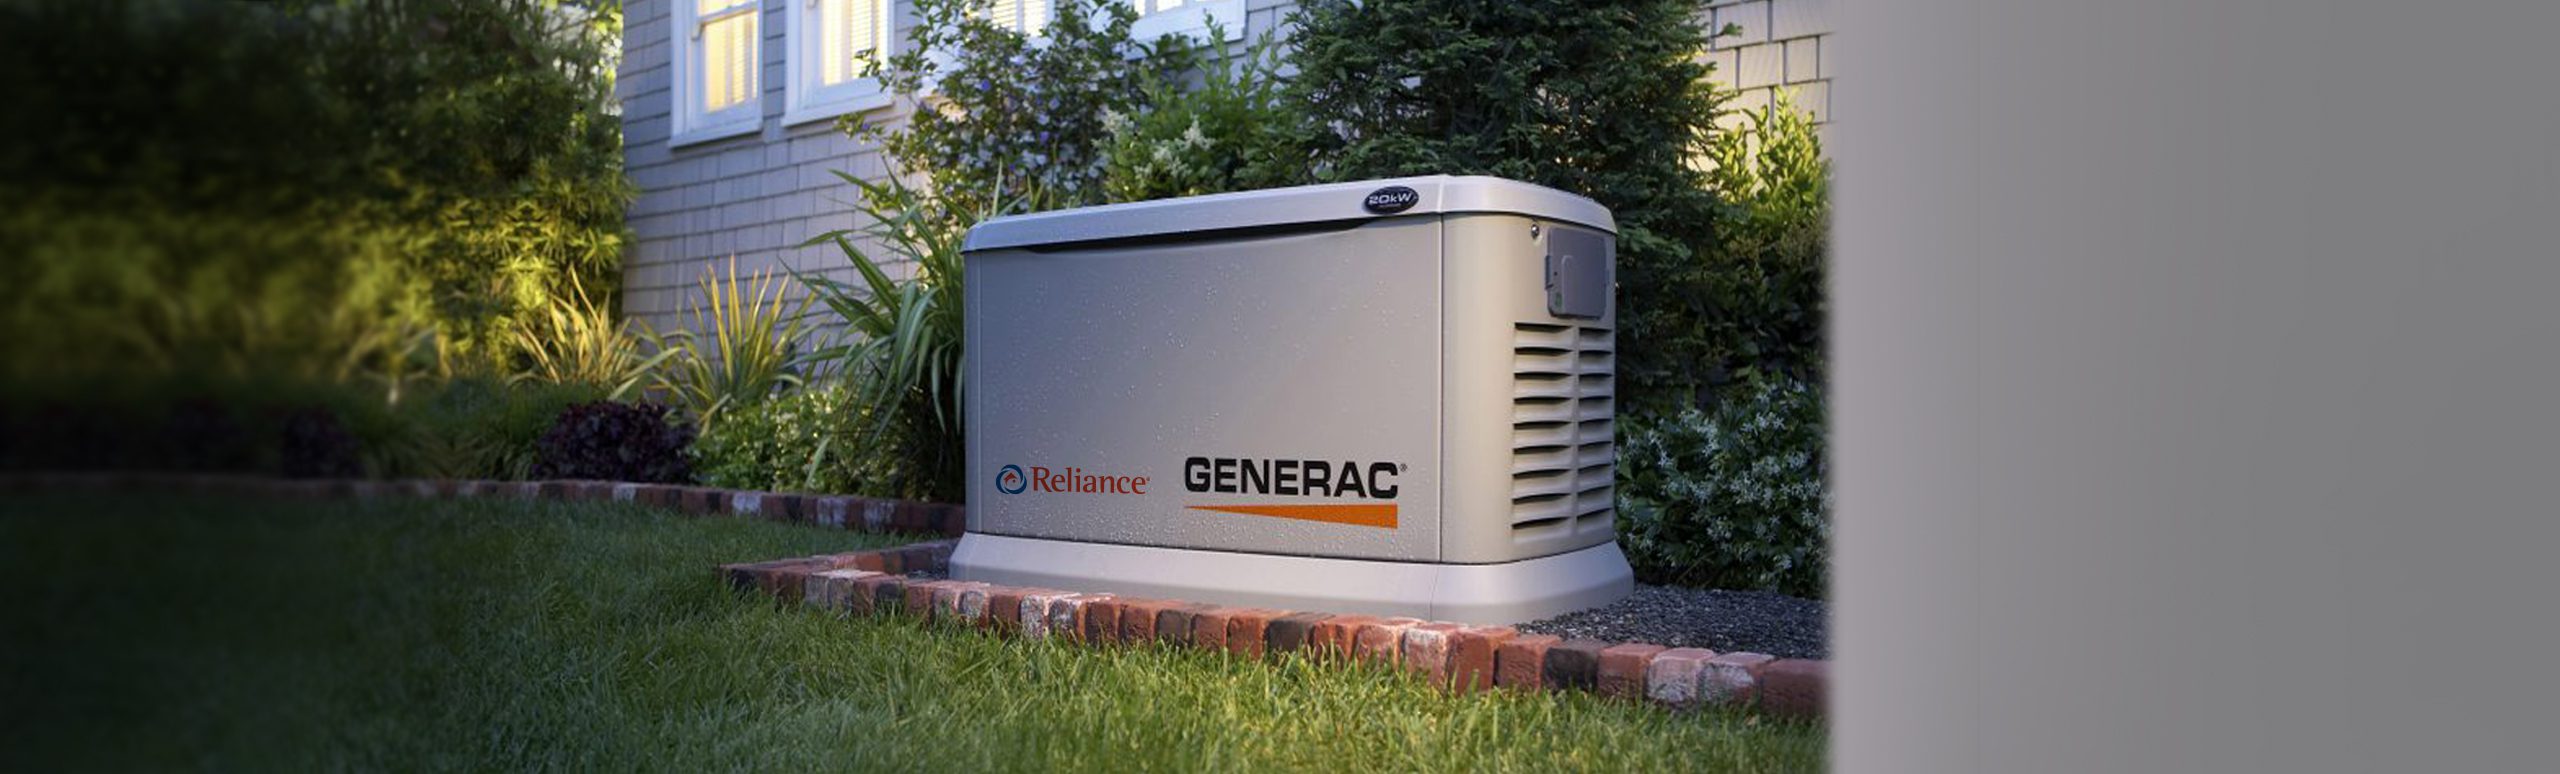 Generac Generator outside a home